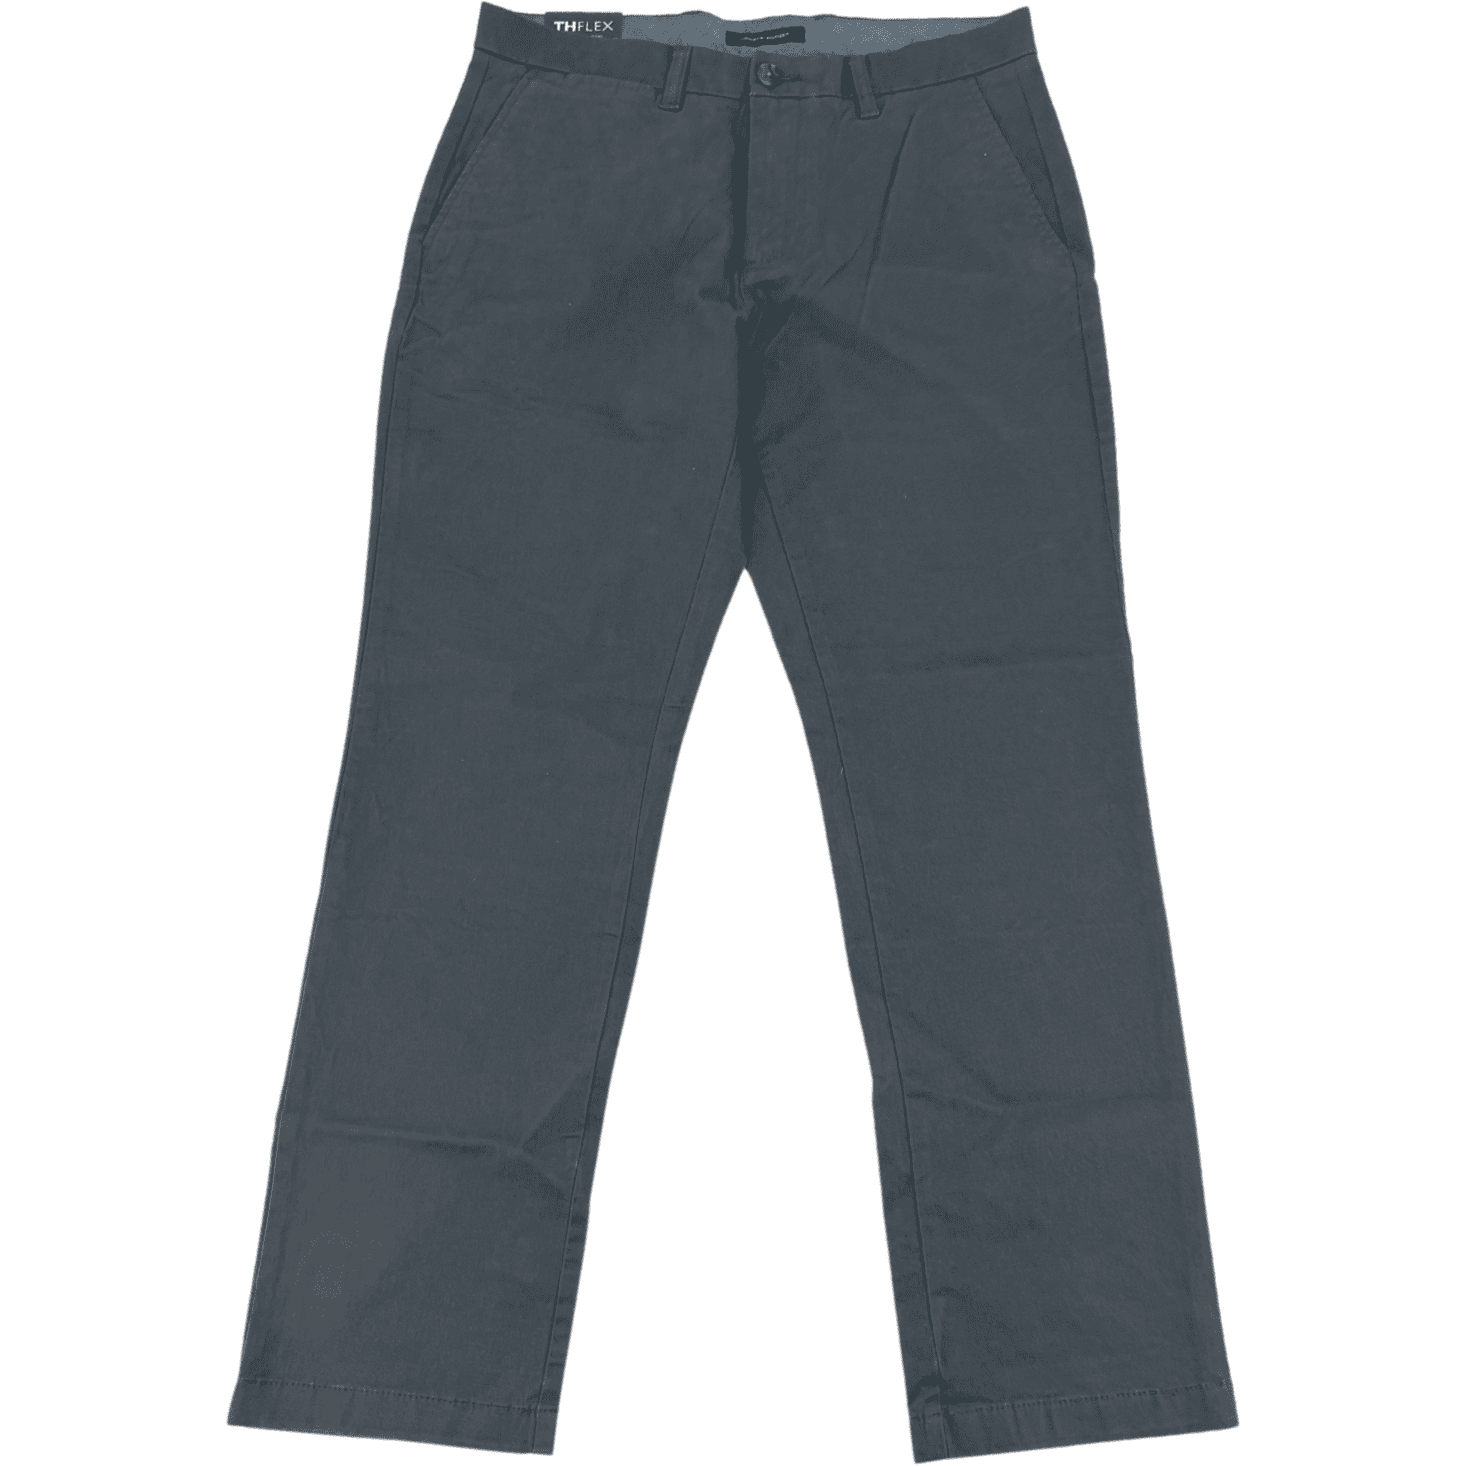 Tommy Hilfiger Men's TH Flex Pants / Grey / Size 32 x 30L